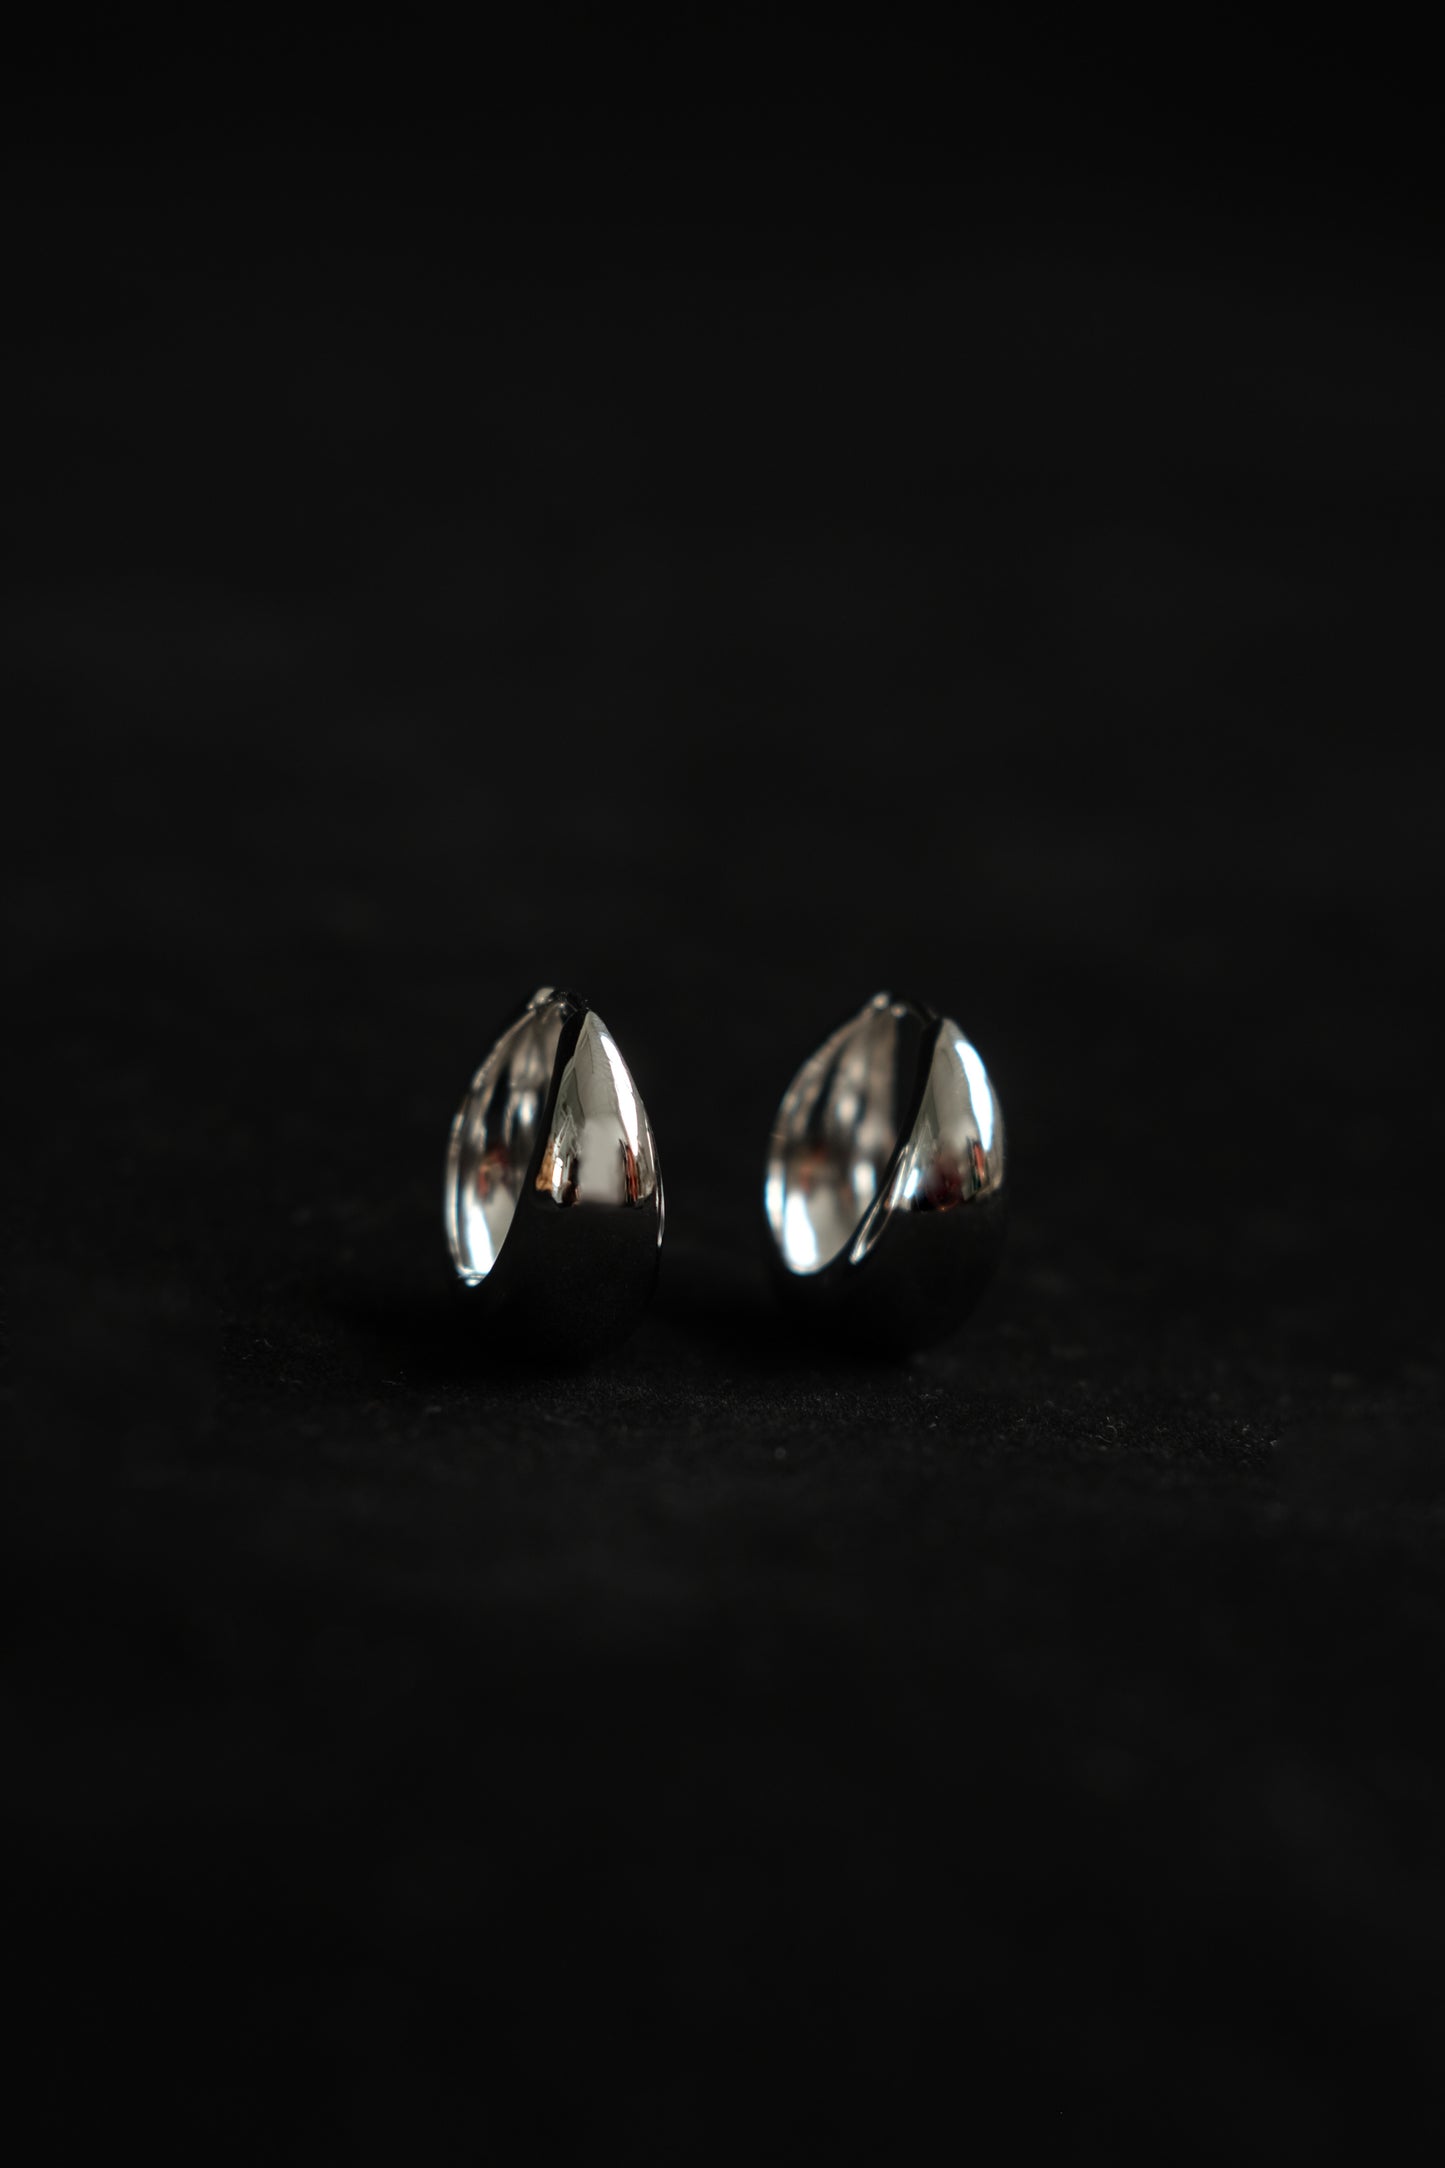 Circle earrings in silver